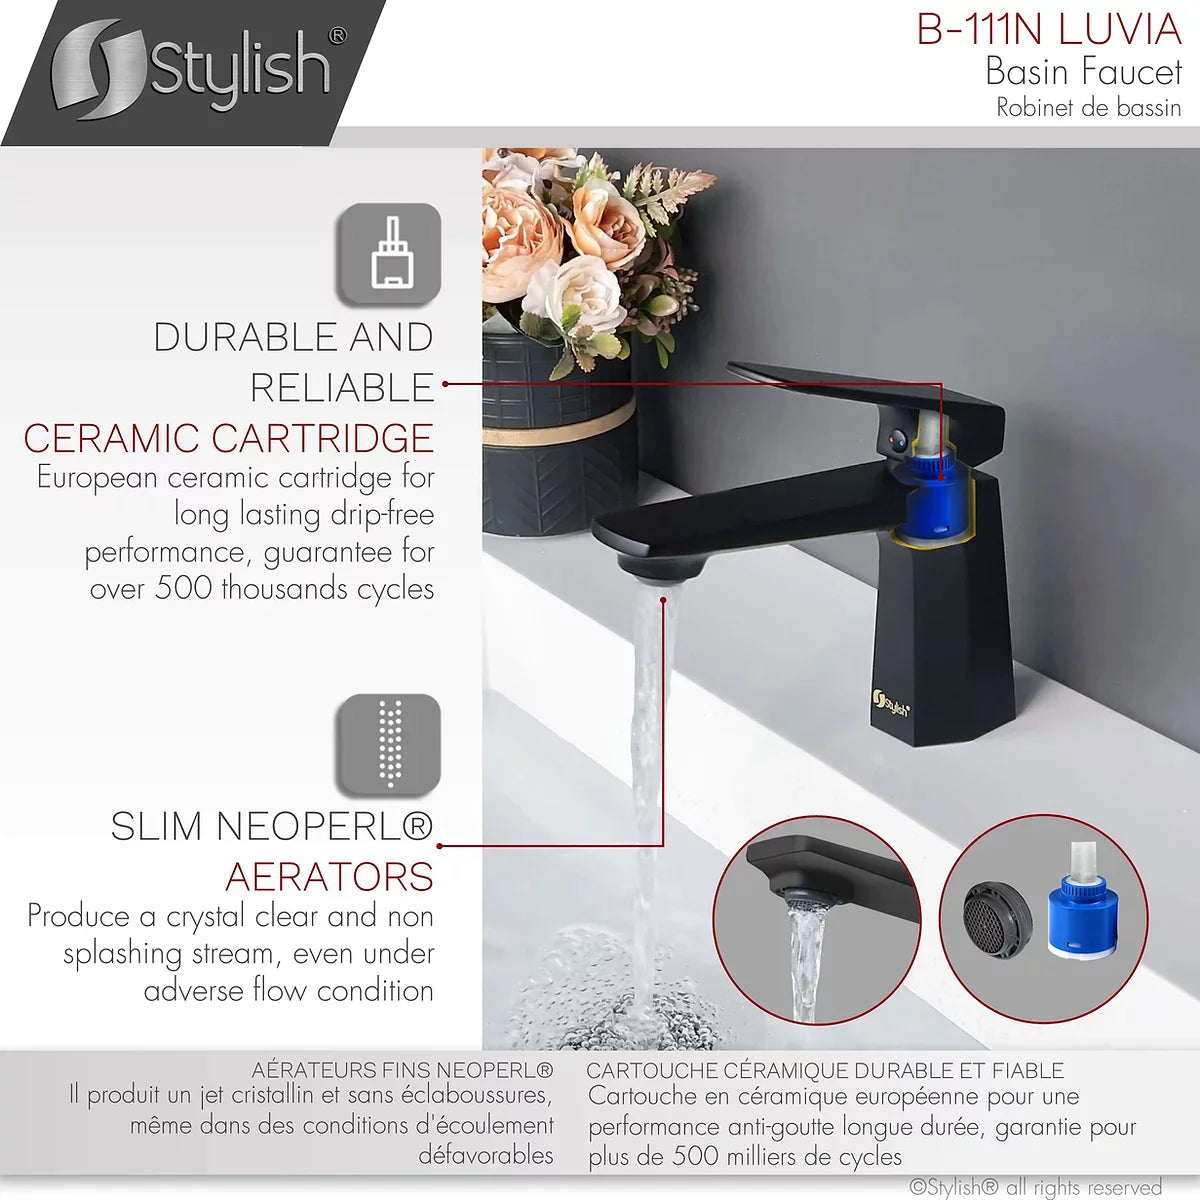 Stylish Luvia Bathroom Faucet Single Handle Matte Black Finish B-111N